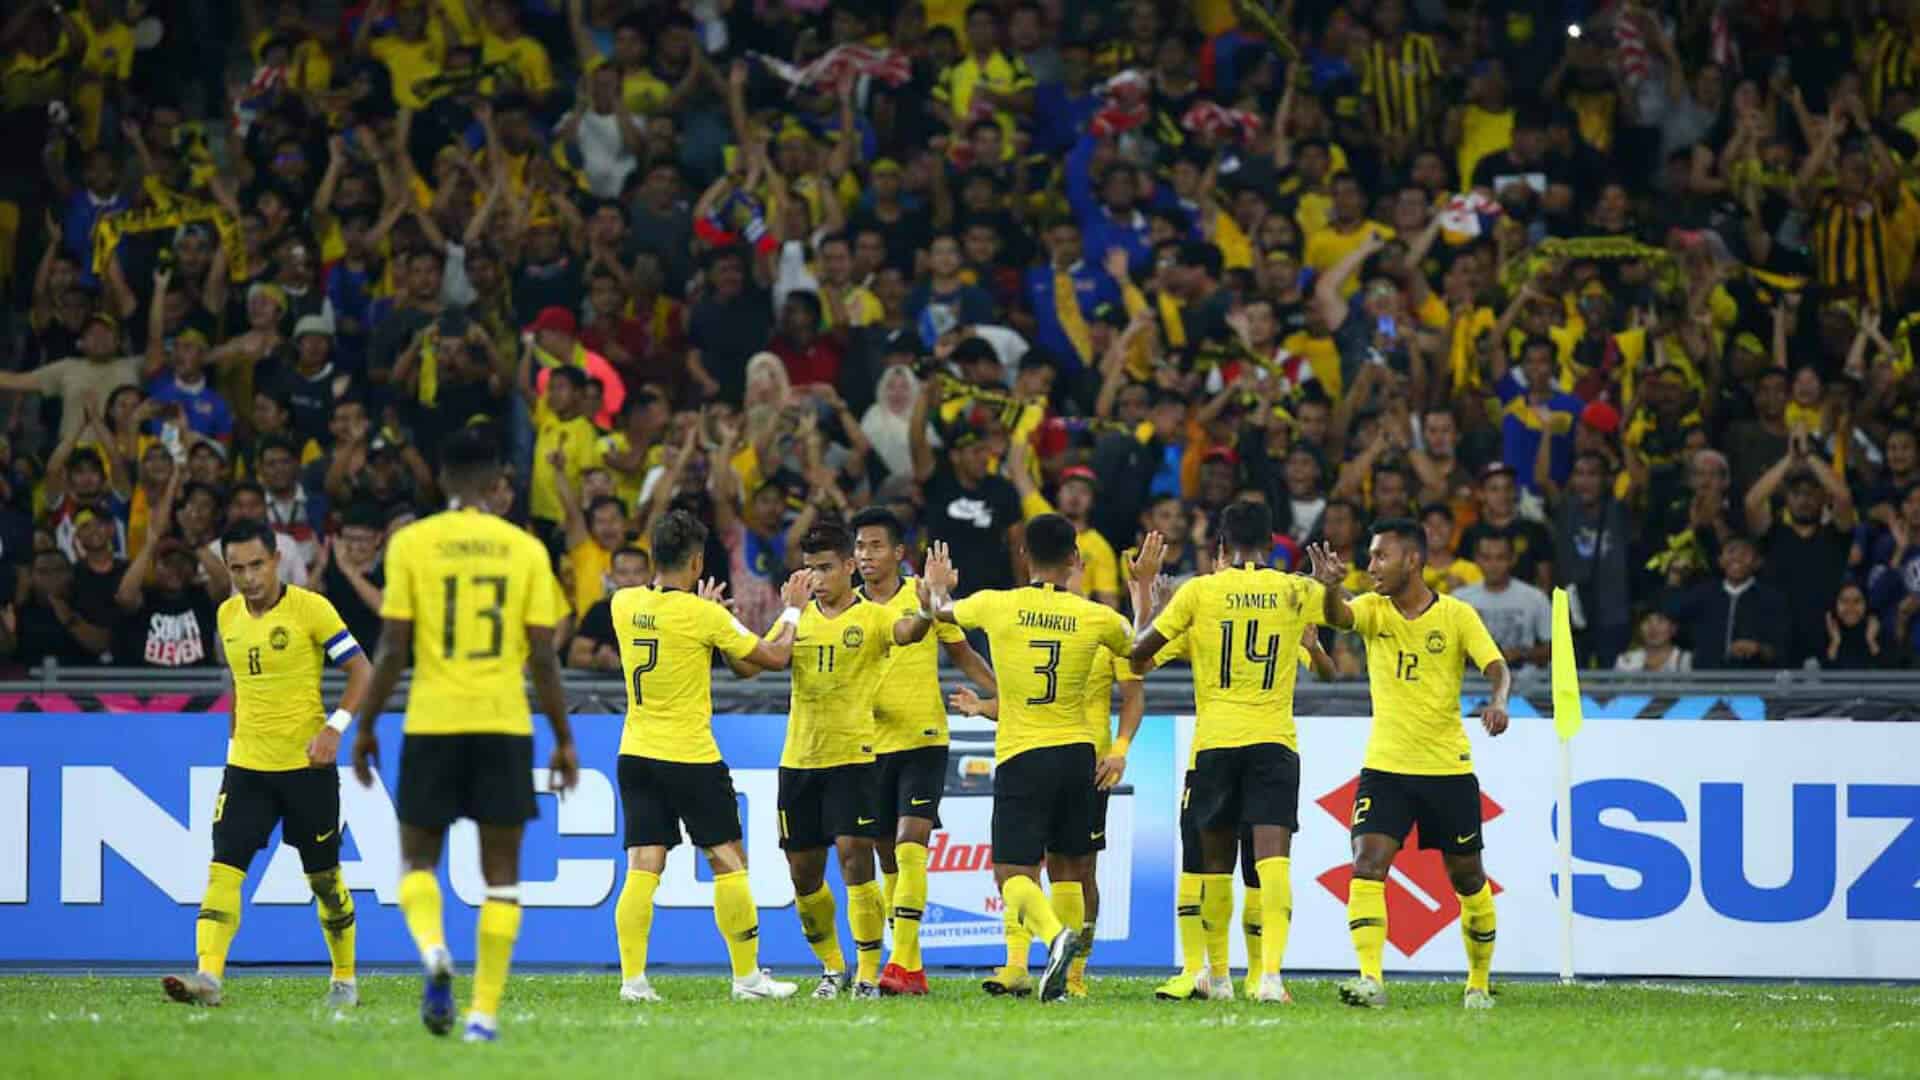 MALAYSIA NATIONAL FC SOCCER TEAM 2019